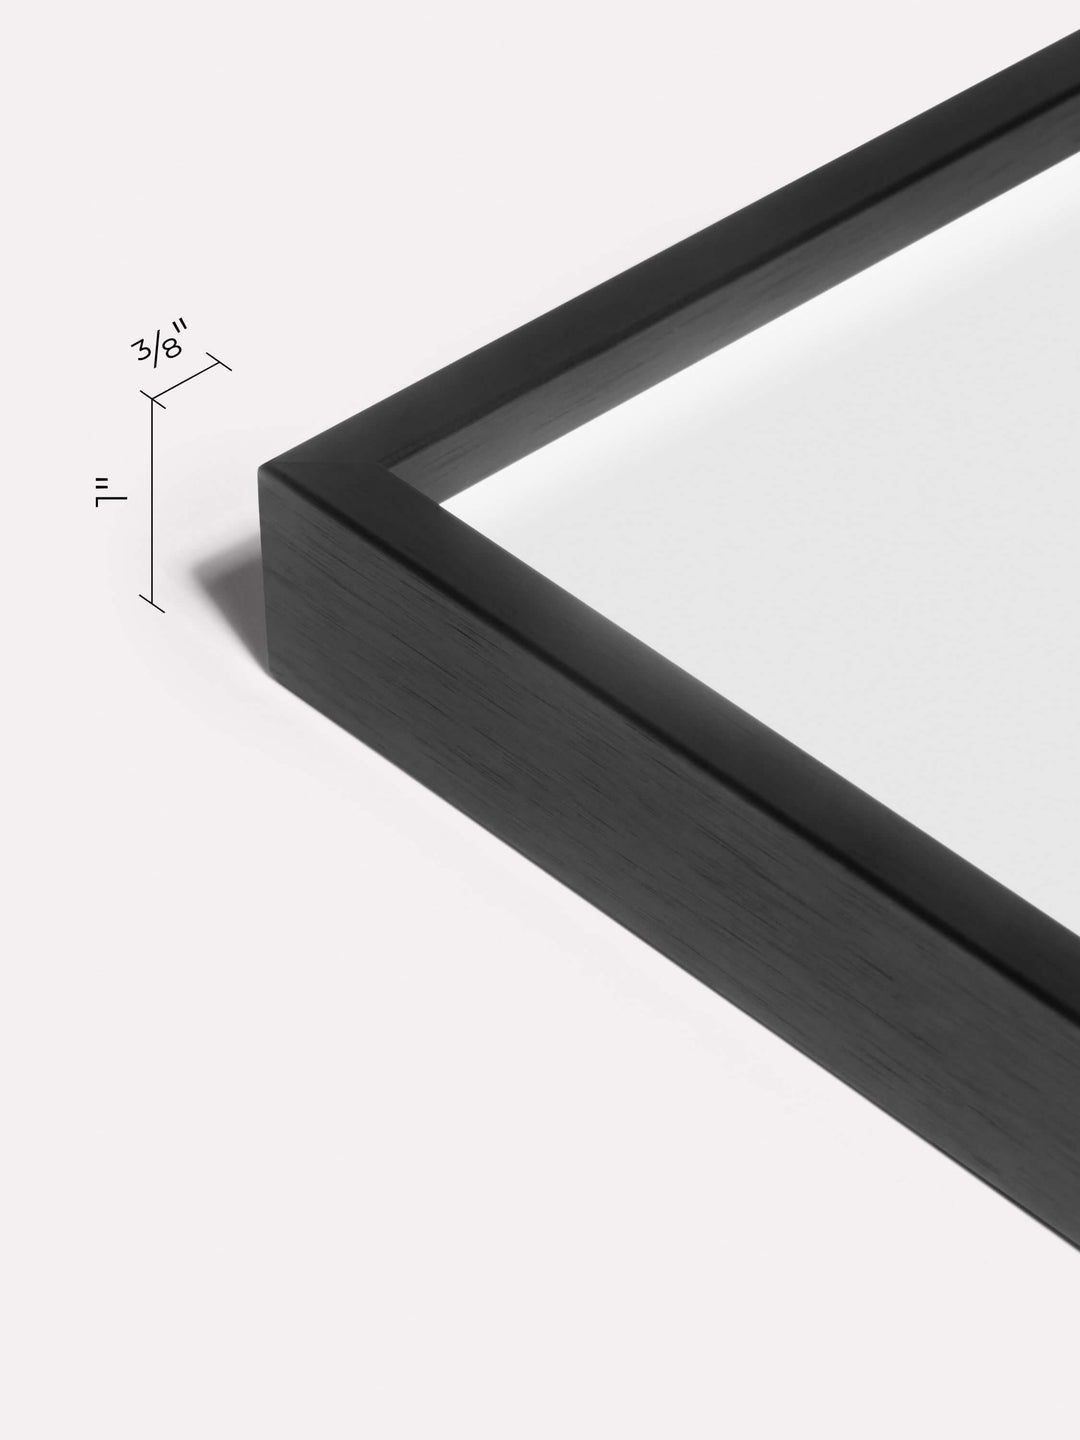 18x24-inch Thin Frame, Black - Close-up view